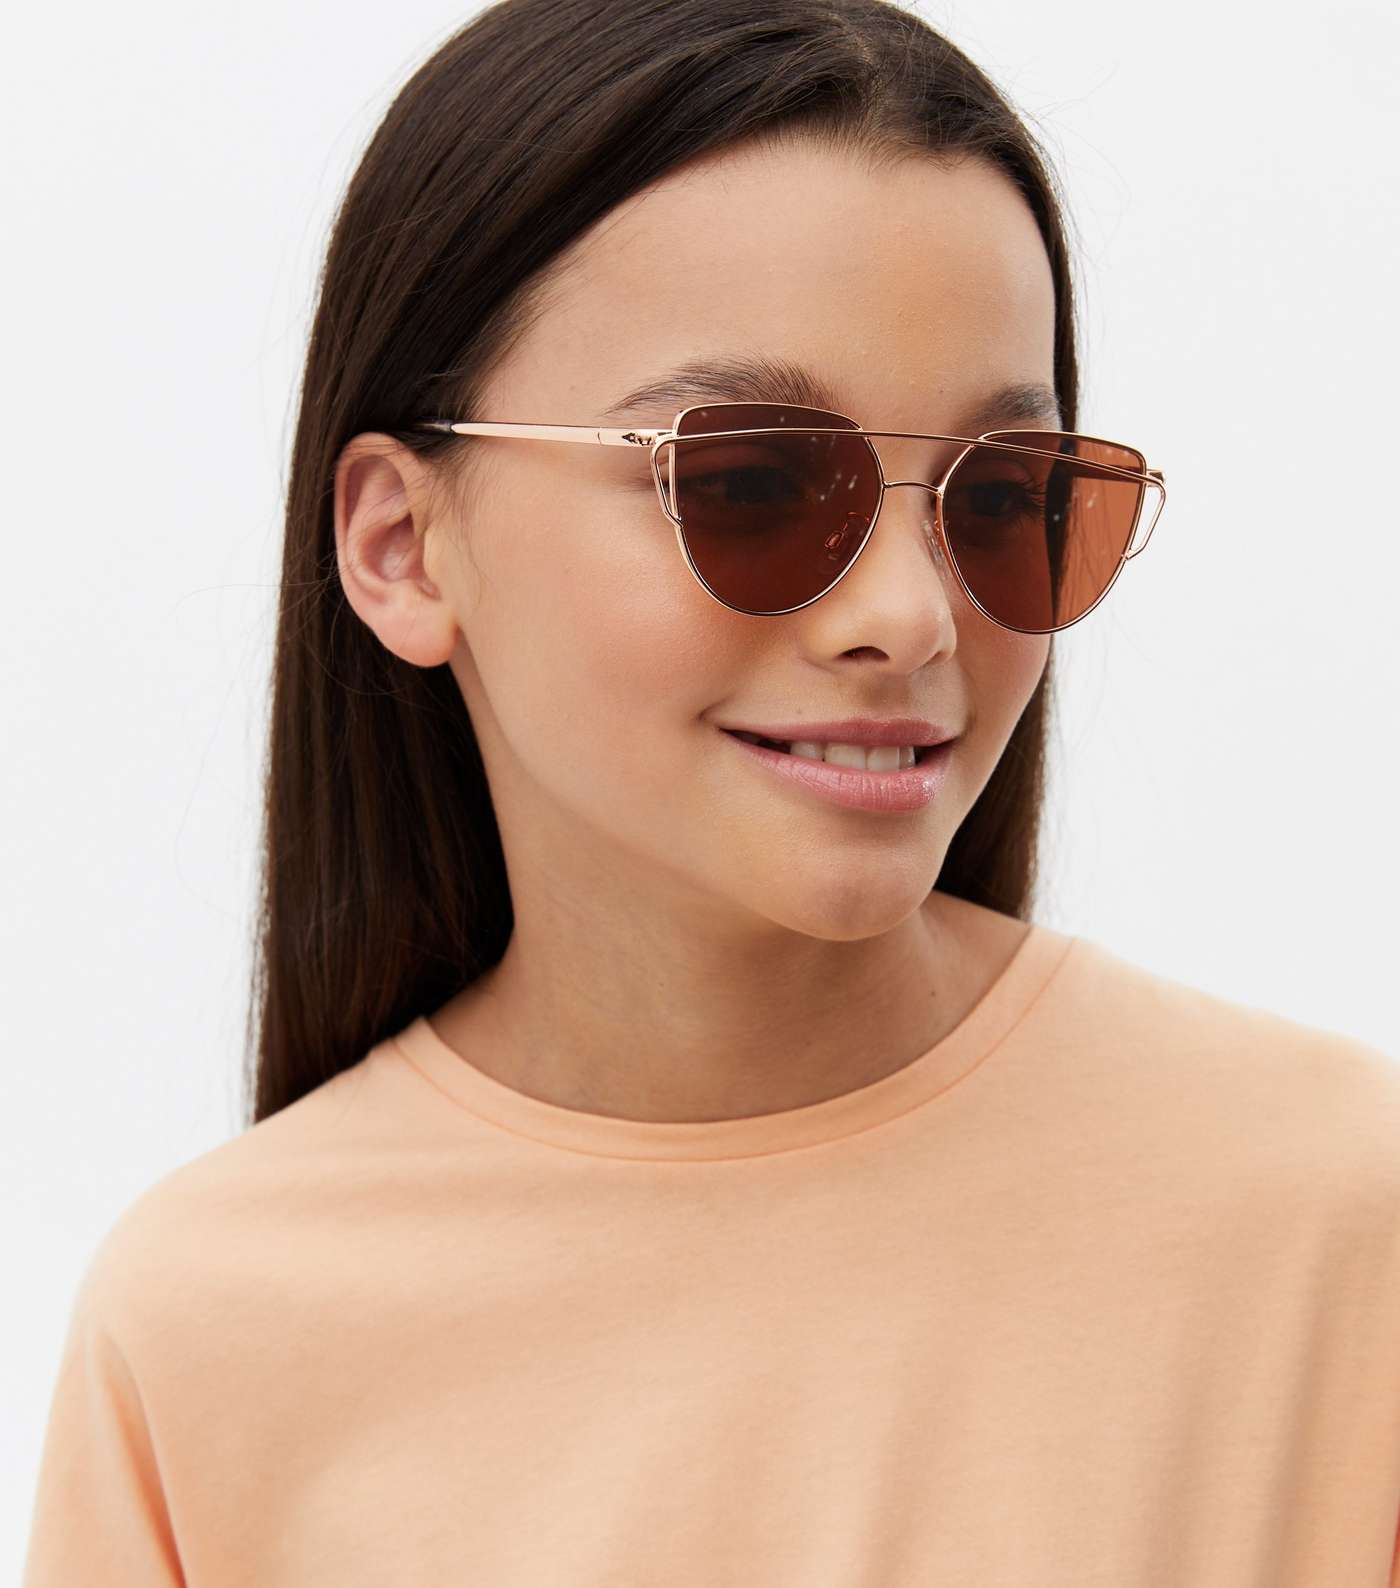 Girls Rose Gold Mirrored Pilot Sunglasses